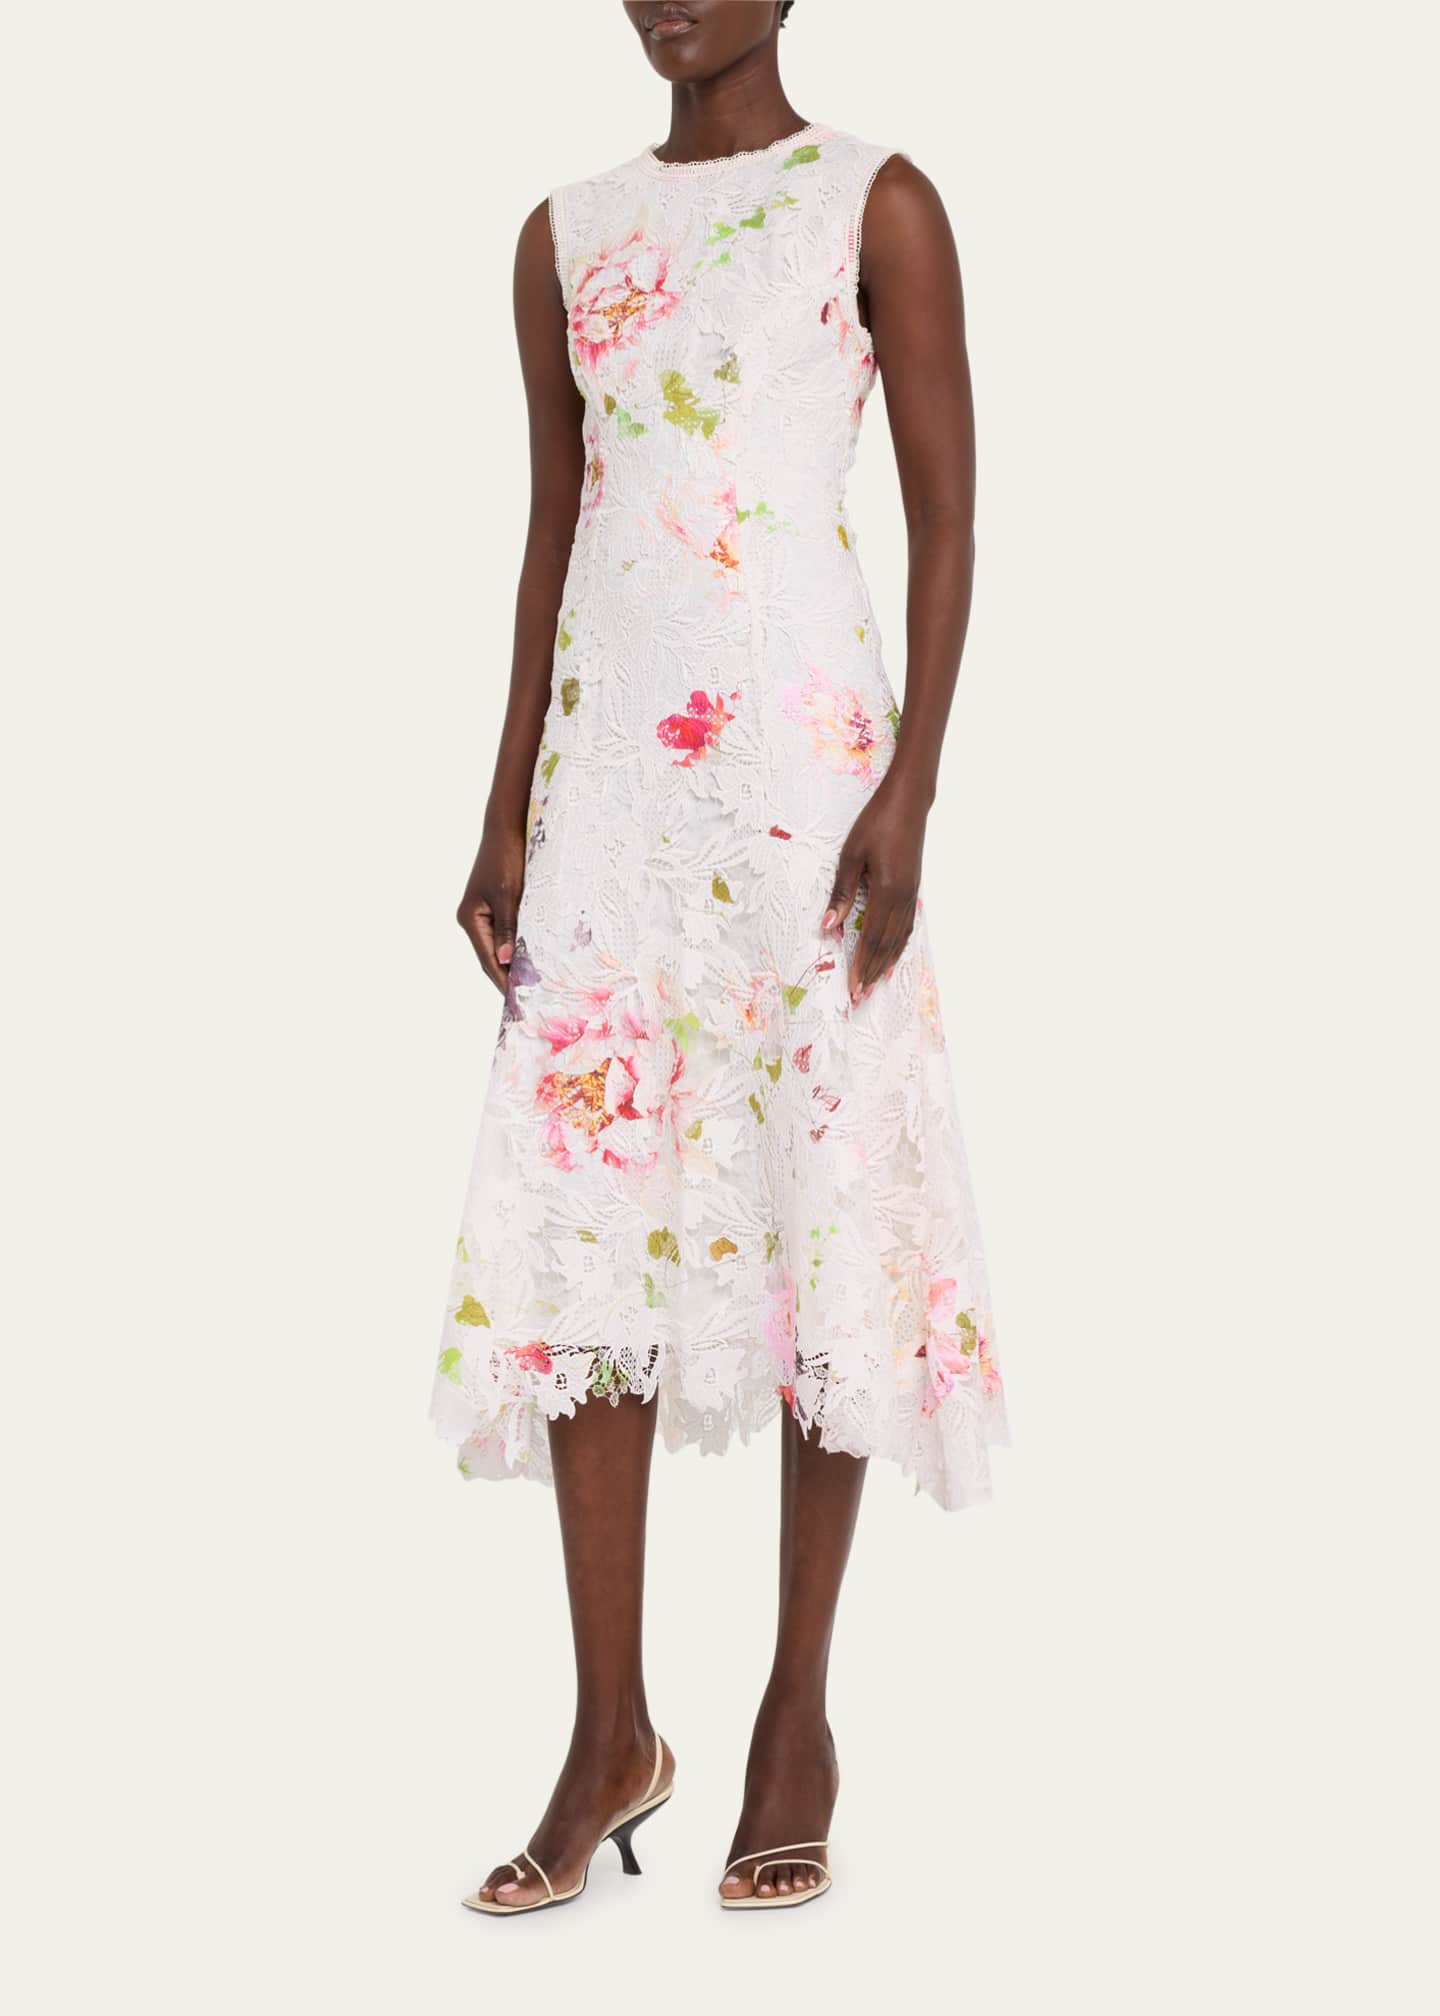 Monique Lhuillier Floral Printed Lace Midi Dress - Bergdorf Goodman